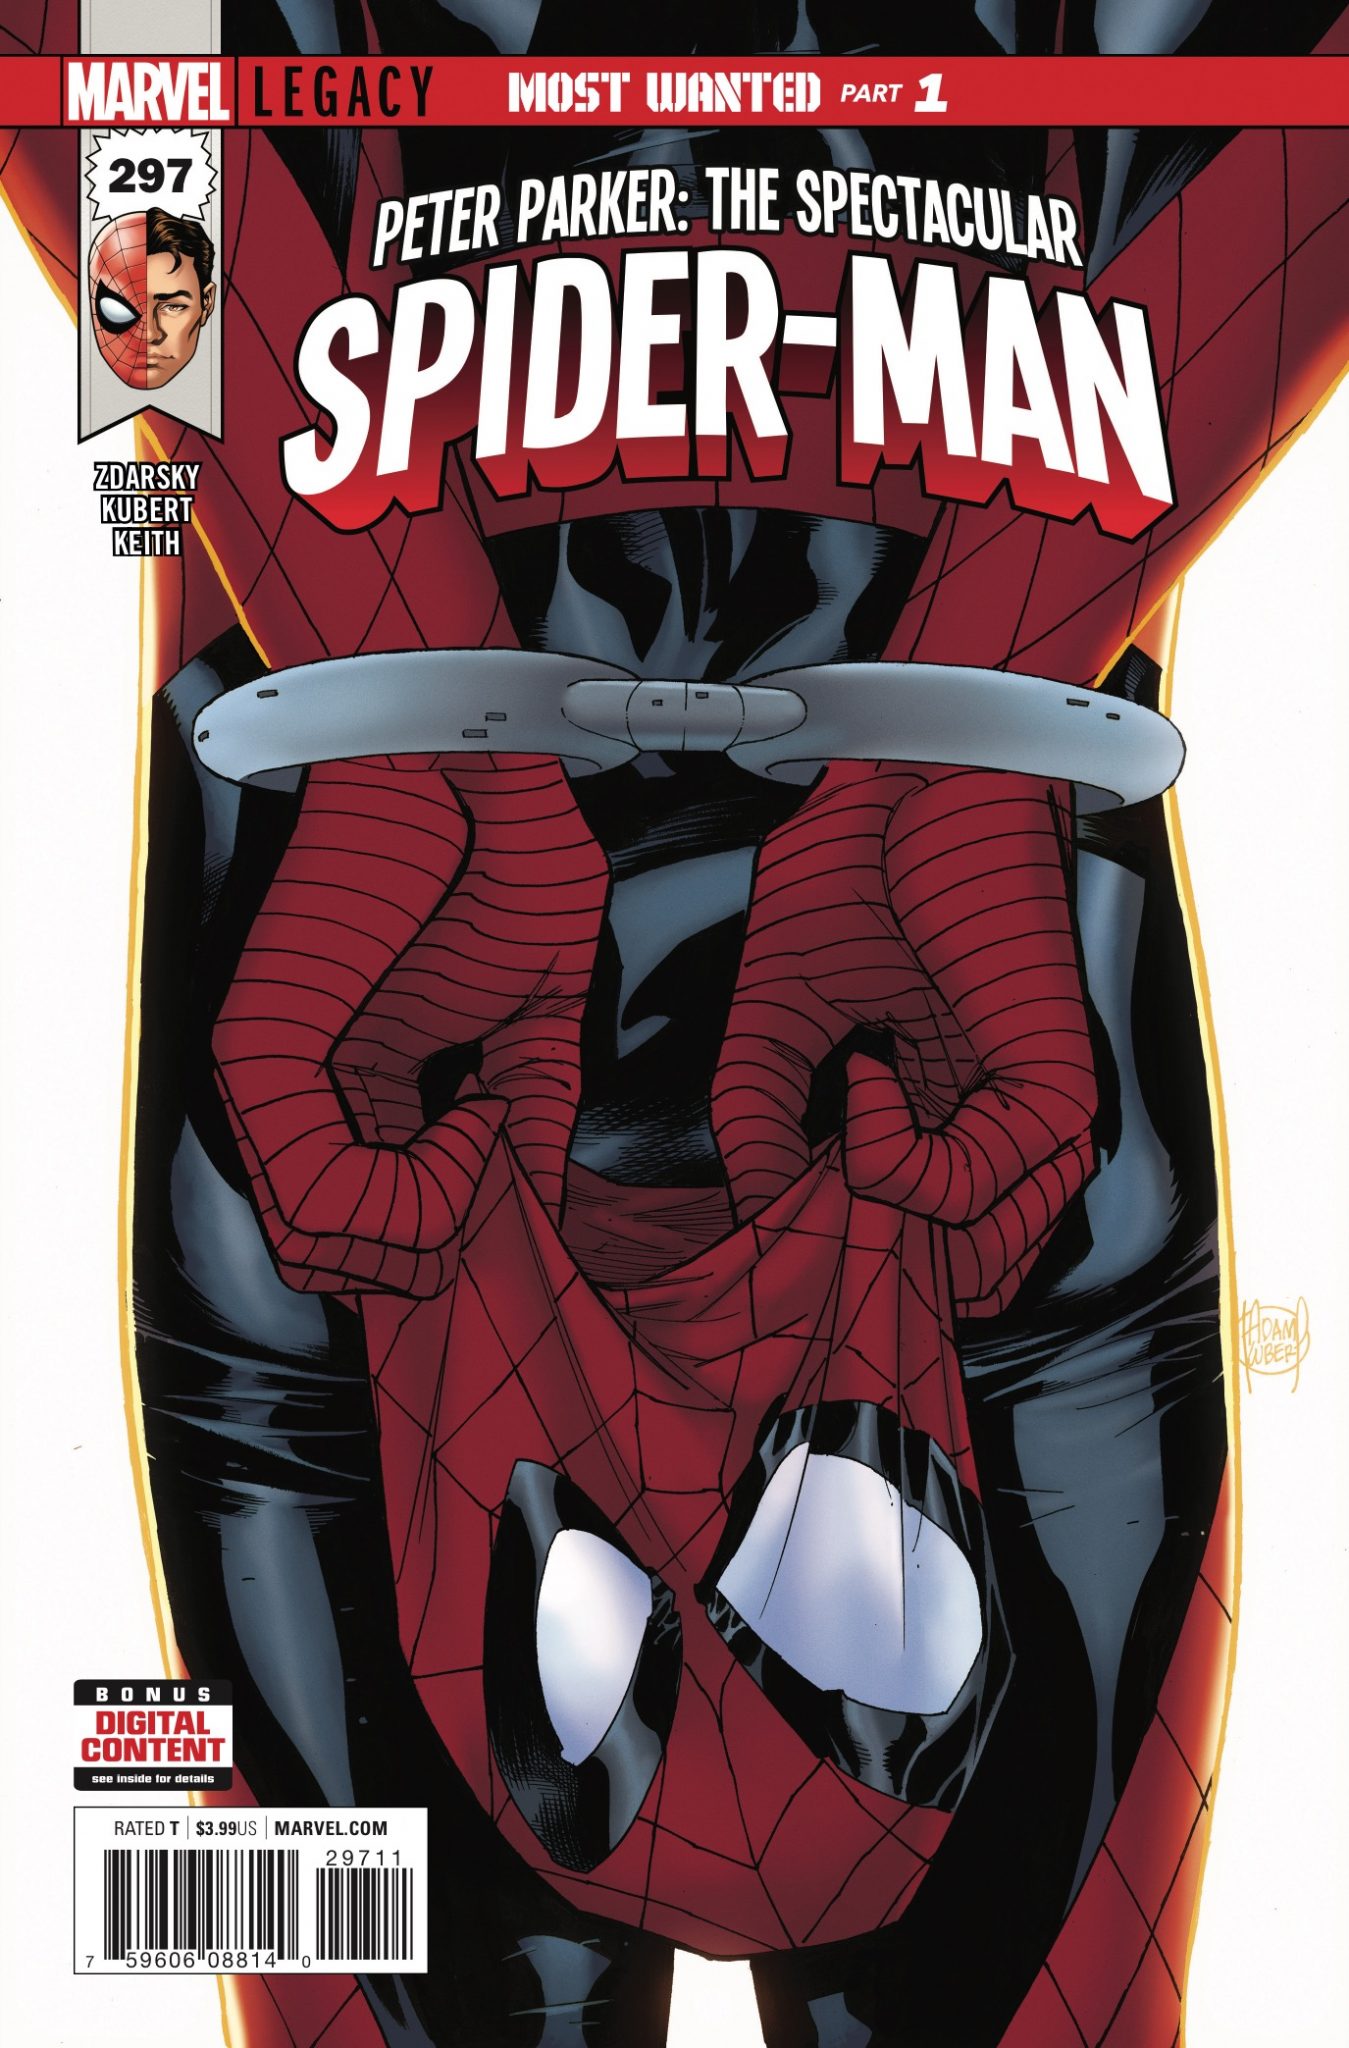 Marvel Preview: Peter Parker: The Spectacular Spider-Man